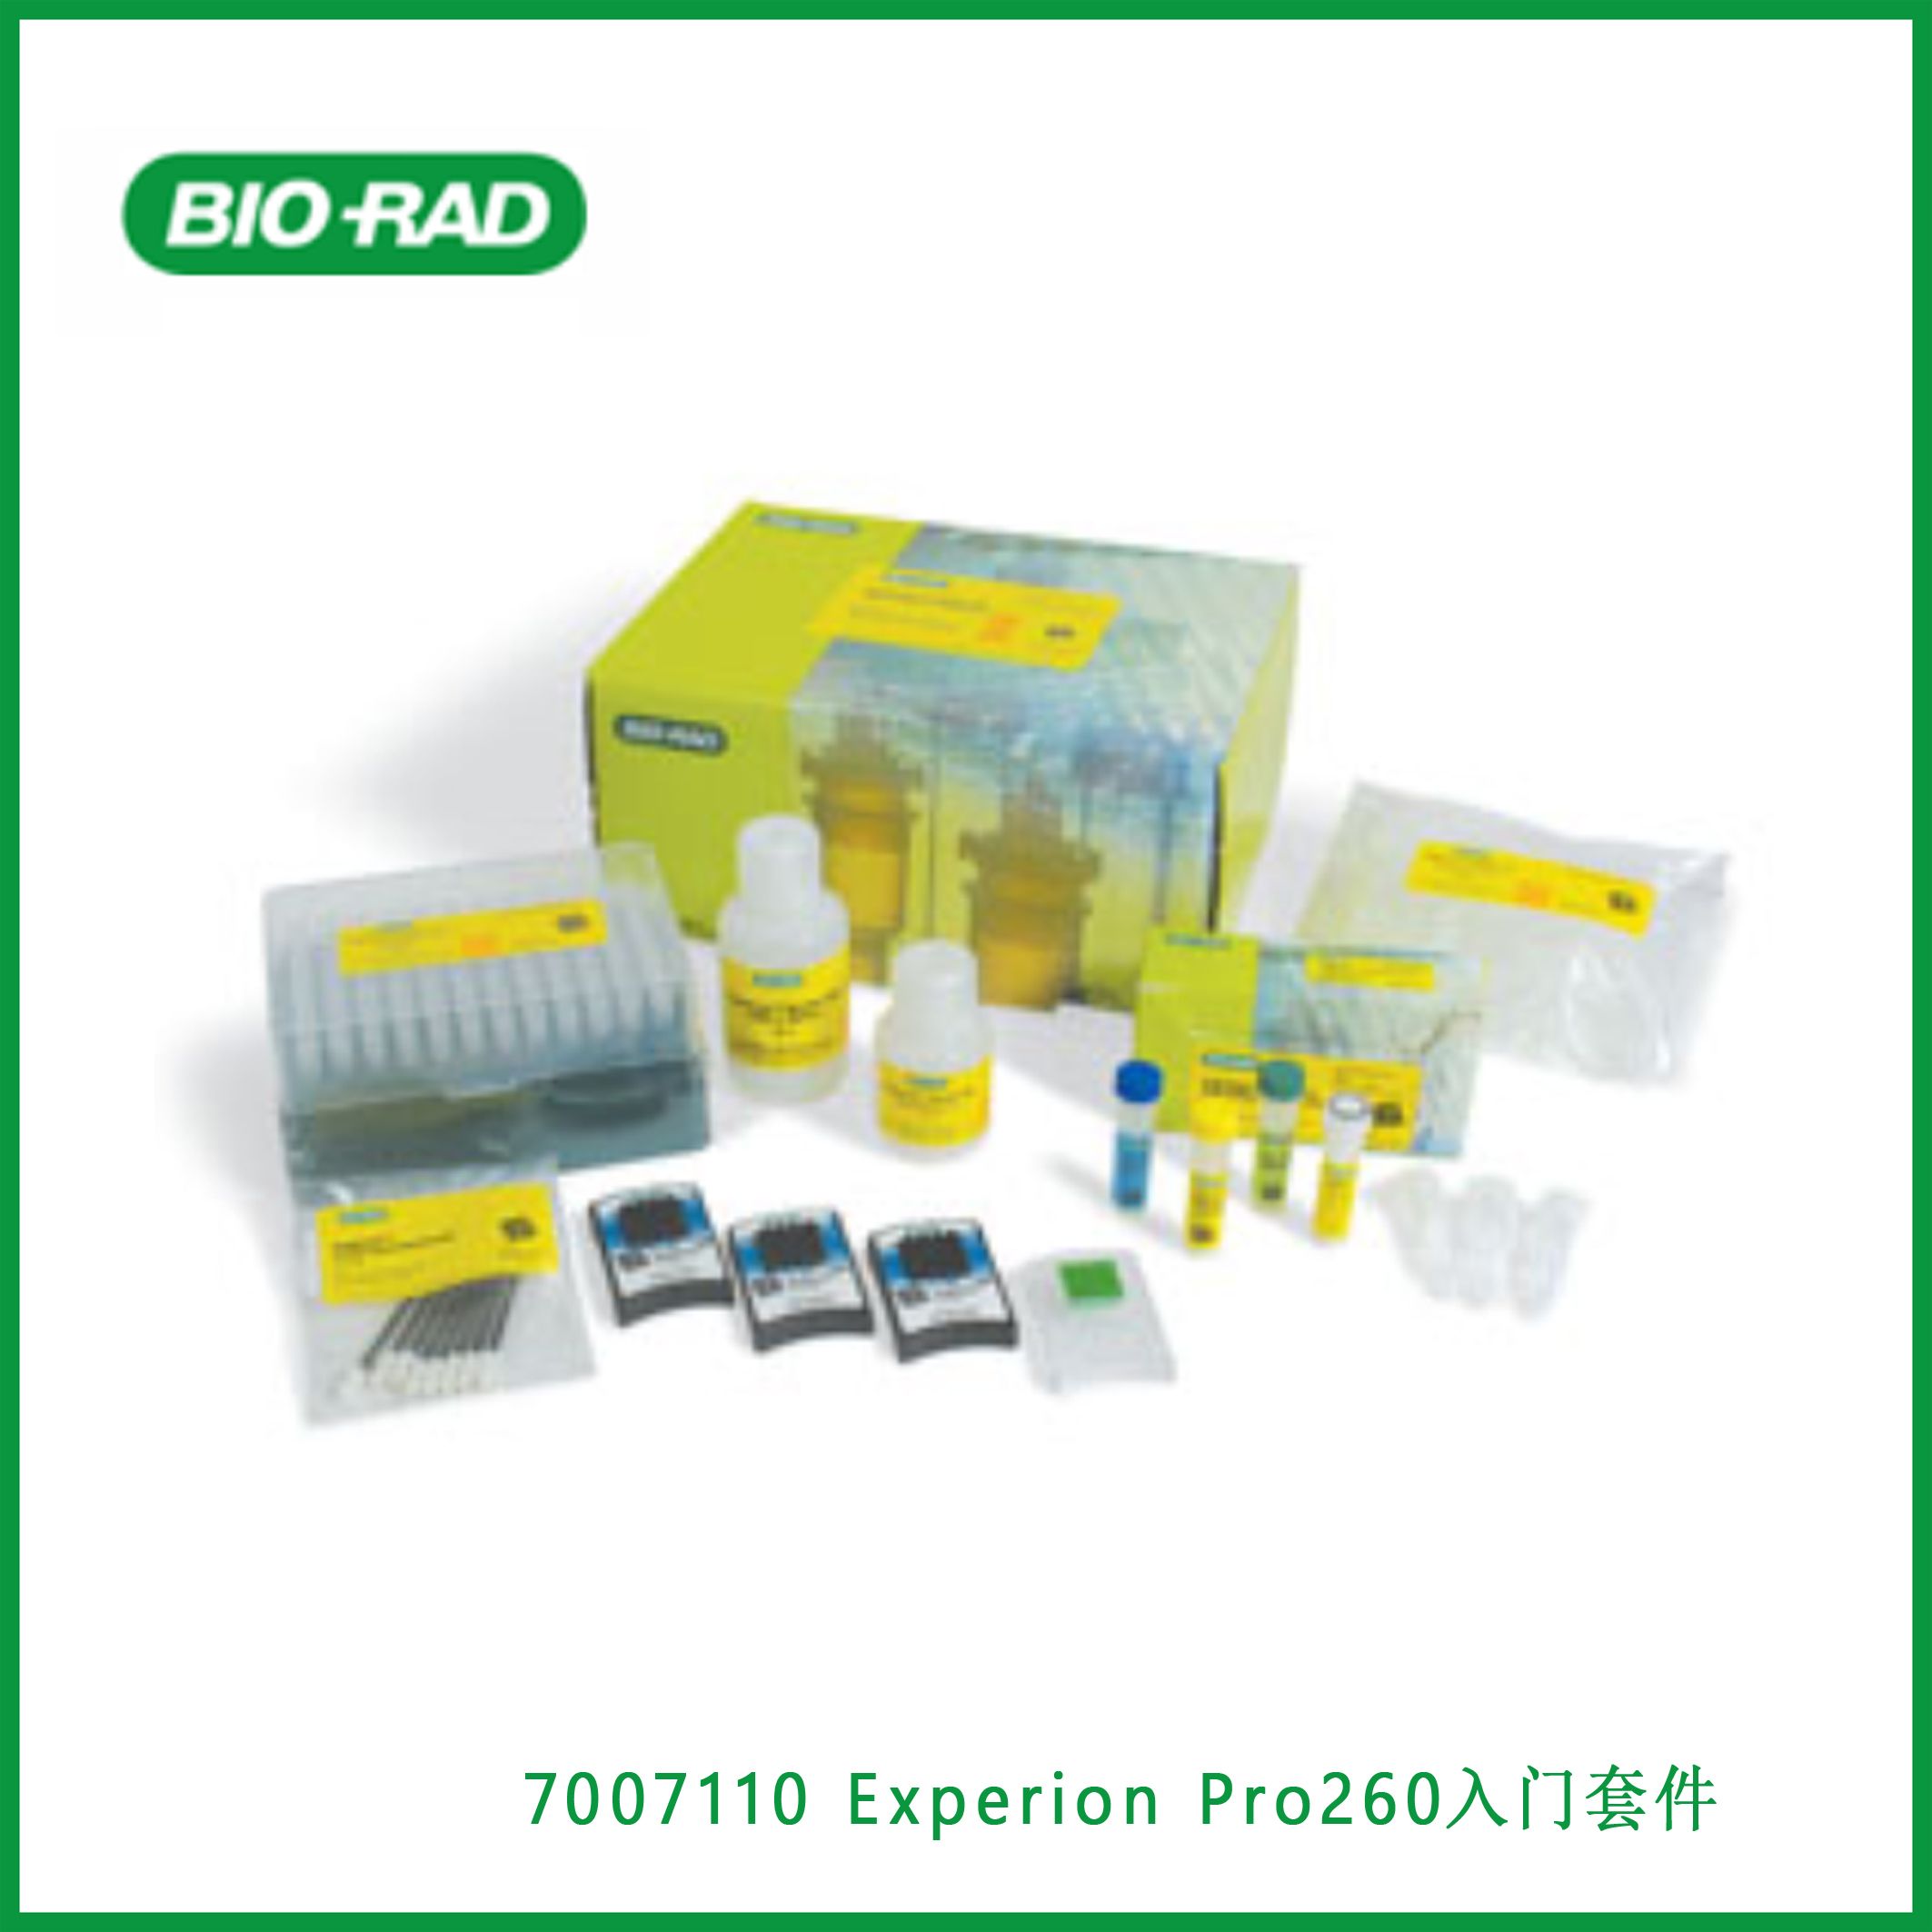 伯乐Bio-Rad7007110Experion Pro260 Starter Kit，Experion Pro260入门套件，现货